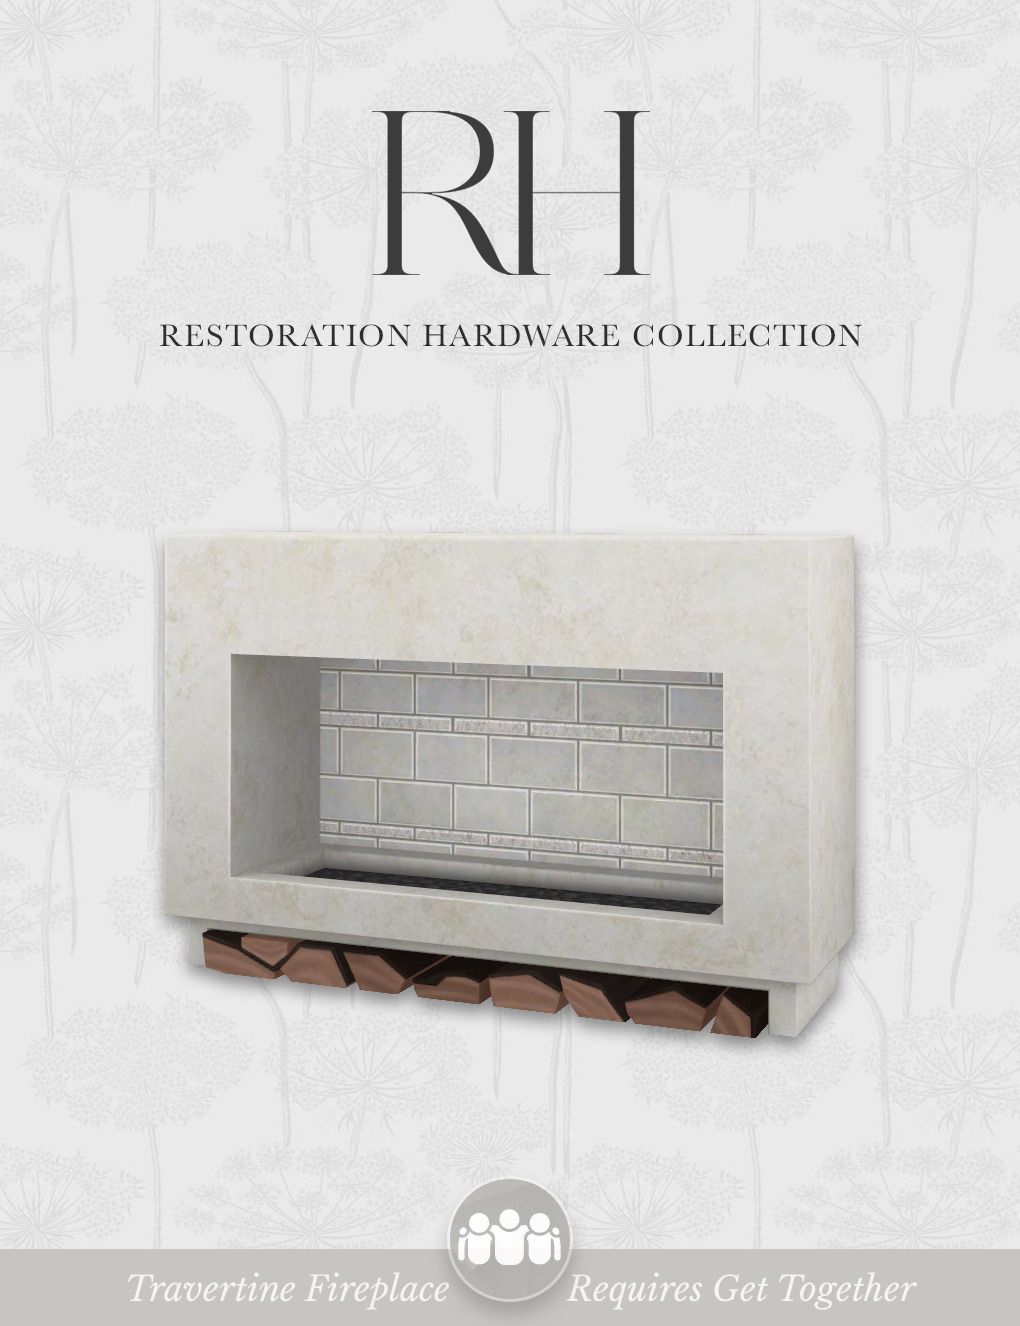 Restoration Hardware Fireplace Beautiful Rh Collection Fireplacethis Beautiful Recolour Of the Get